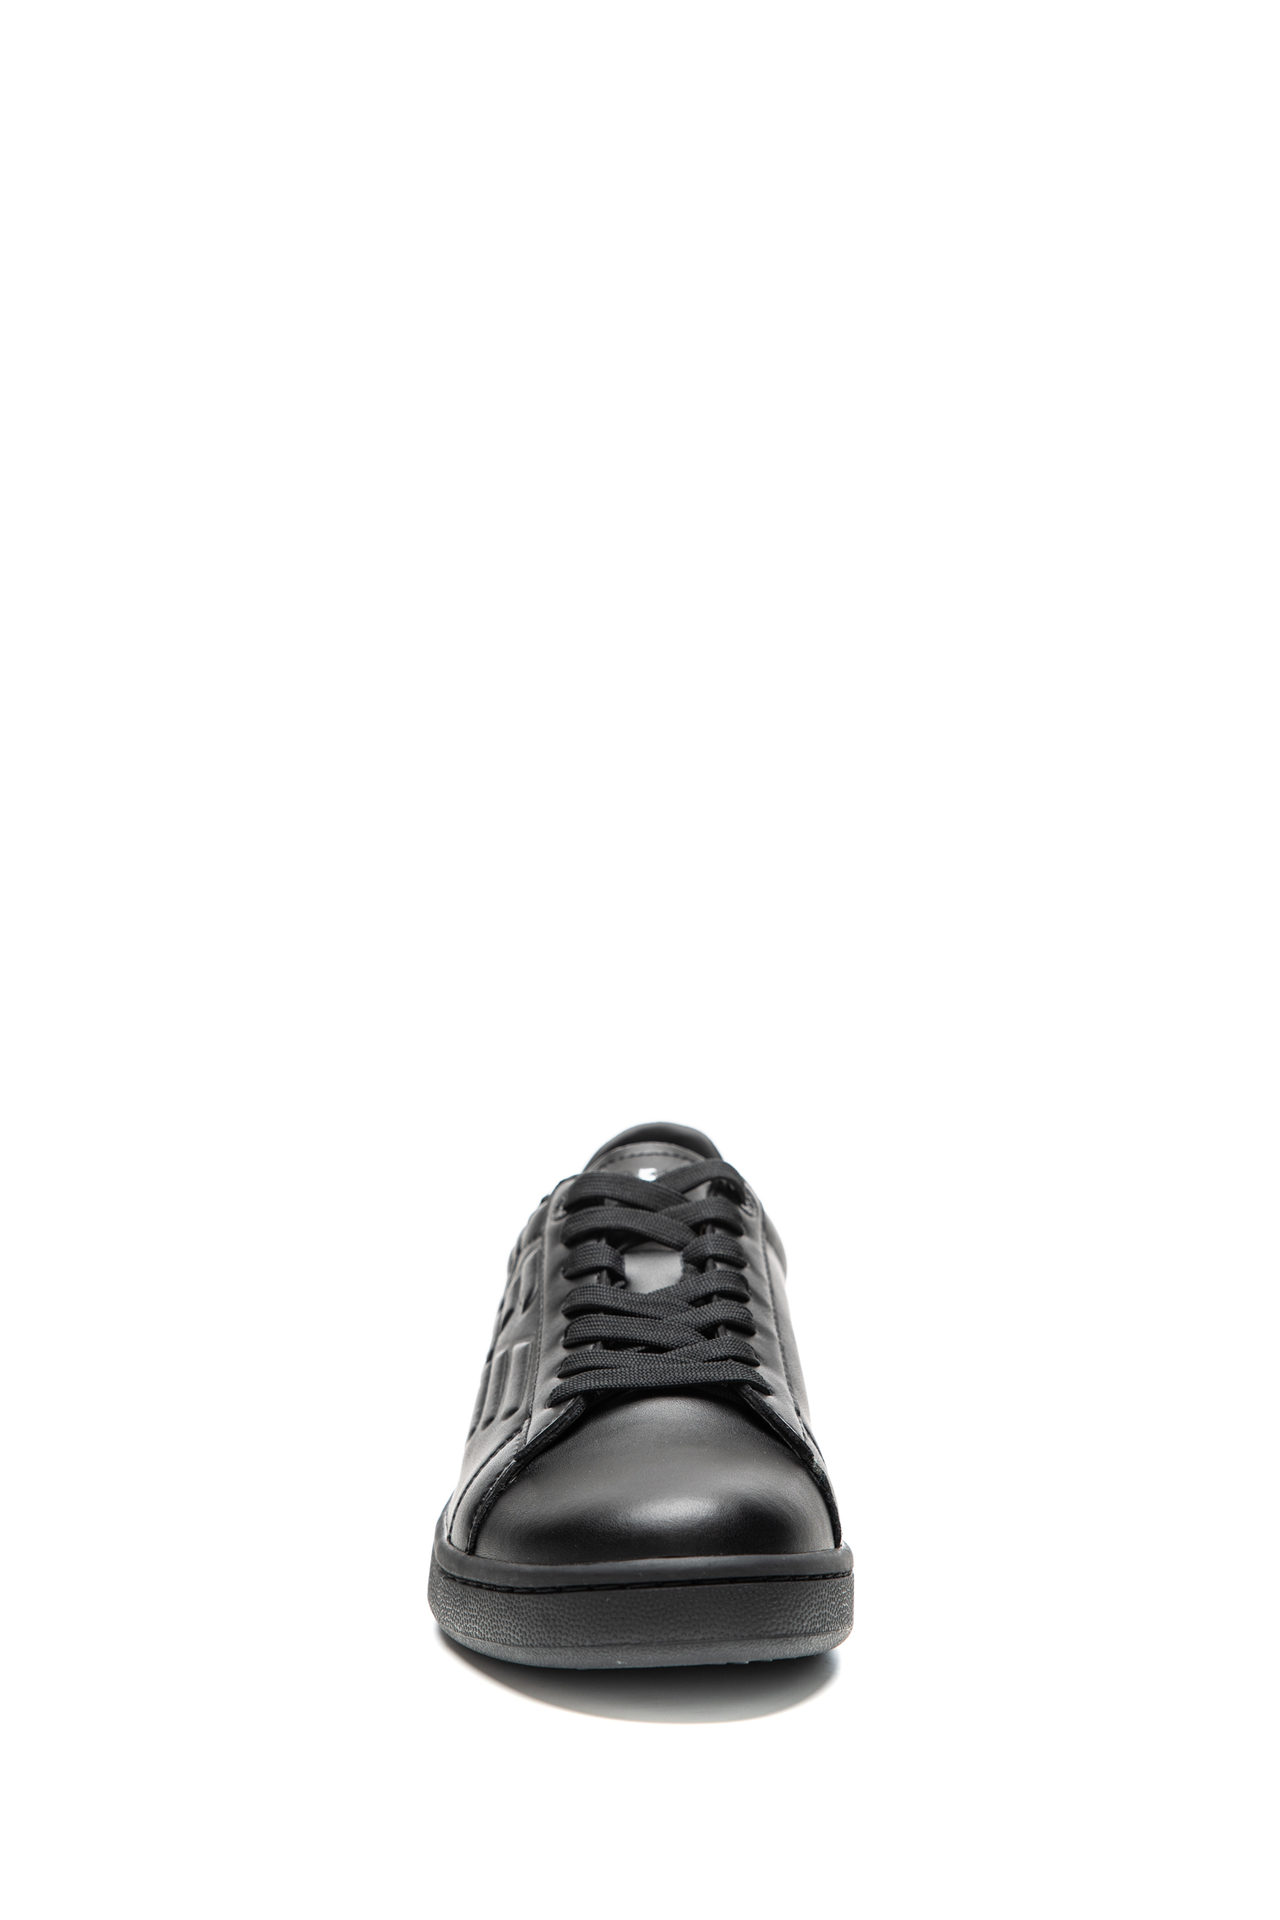 Scarpa sneakers uomo Classic new Ea7 nera in pelle